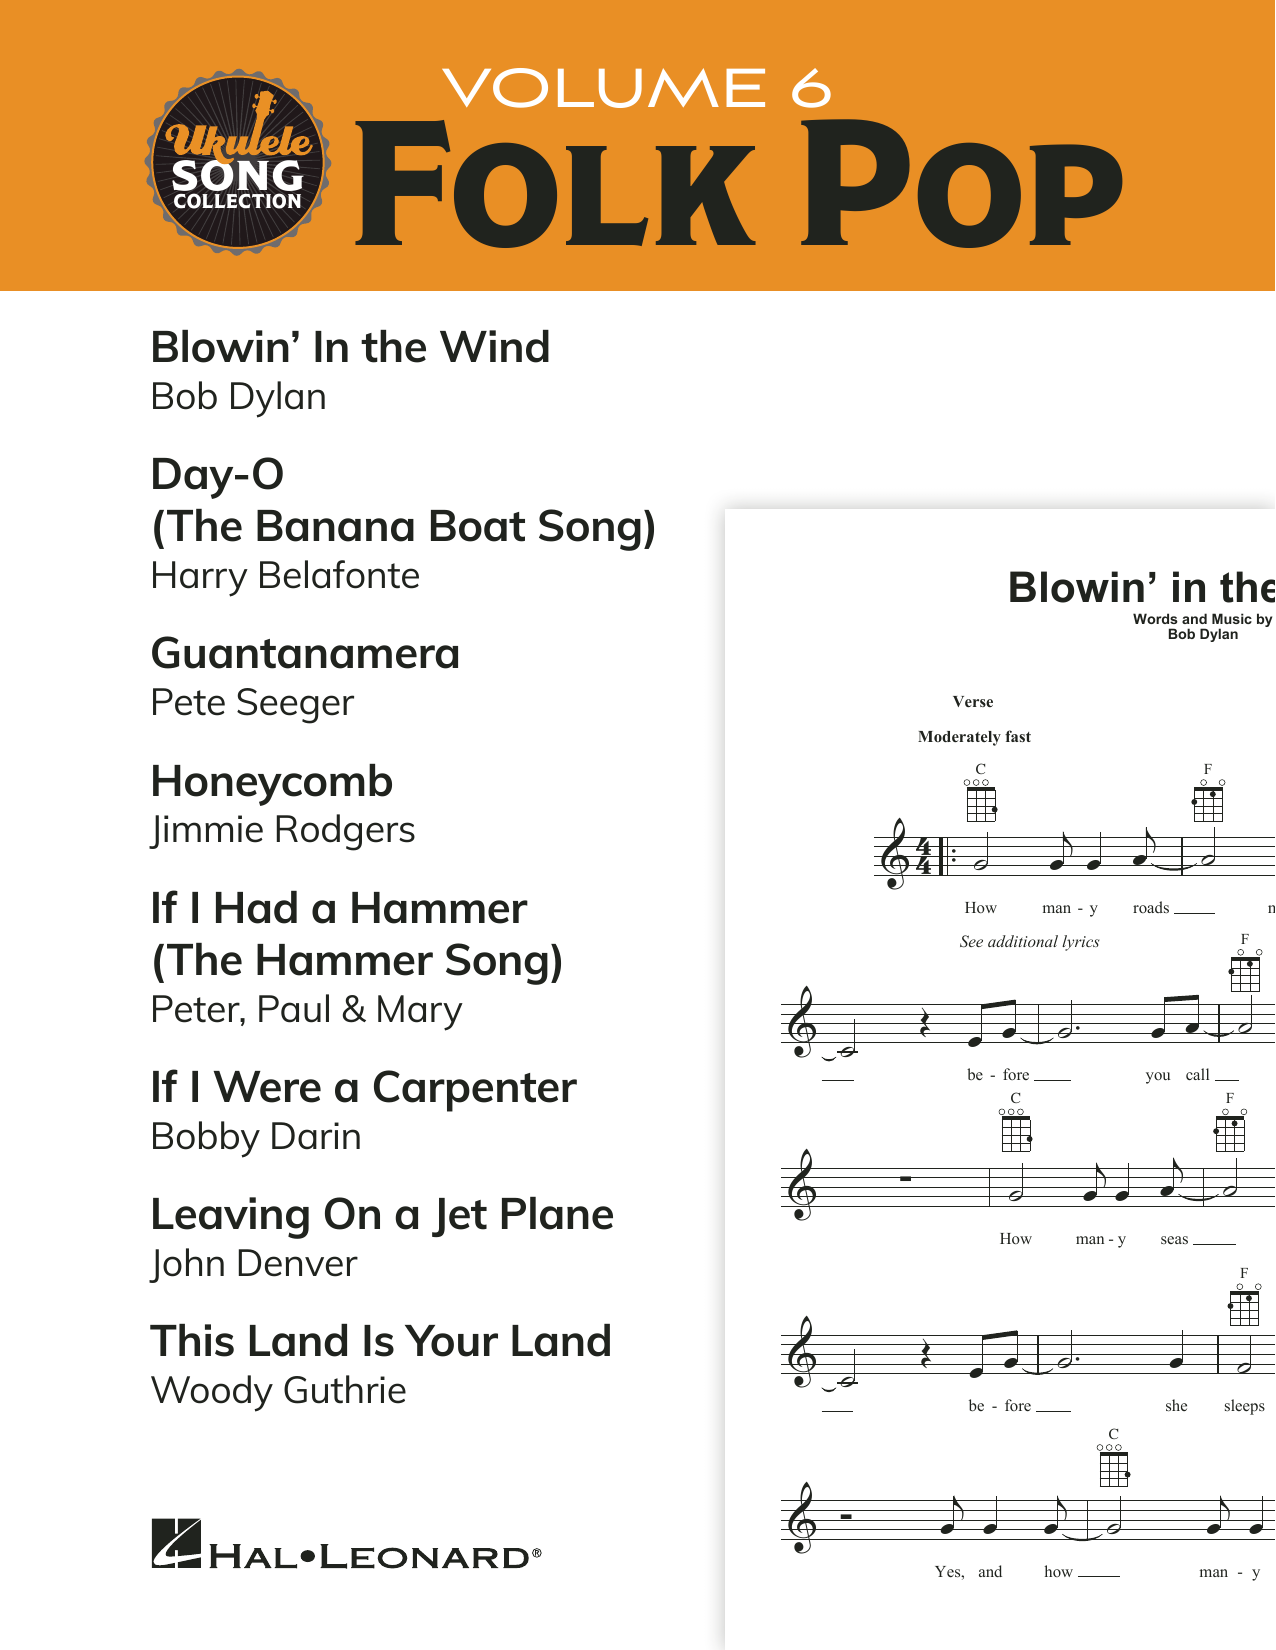 Various Ukulele Song Collection, Volume 6: Folk Pop Sheet Music Notes & Chords for Ukulele Collection - Download or Print PDF